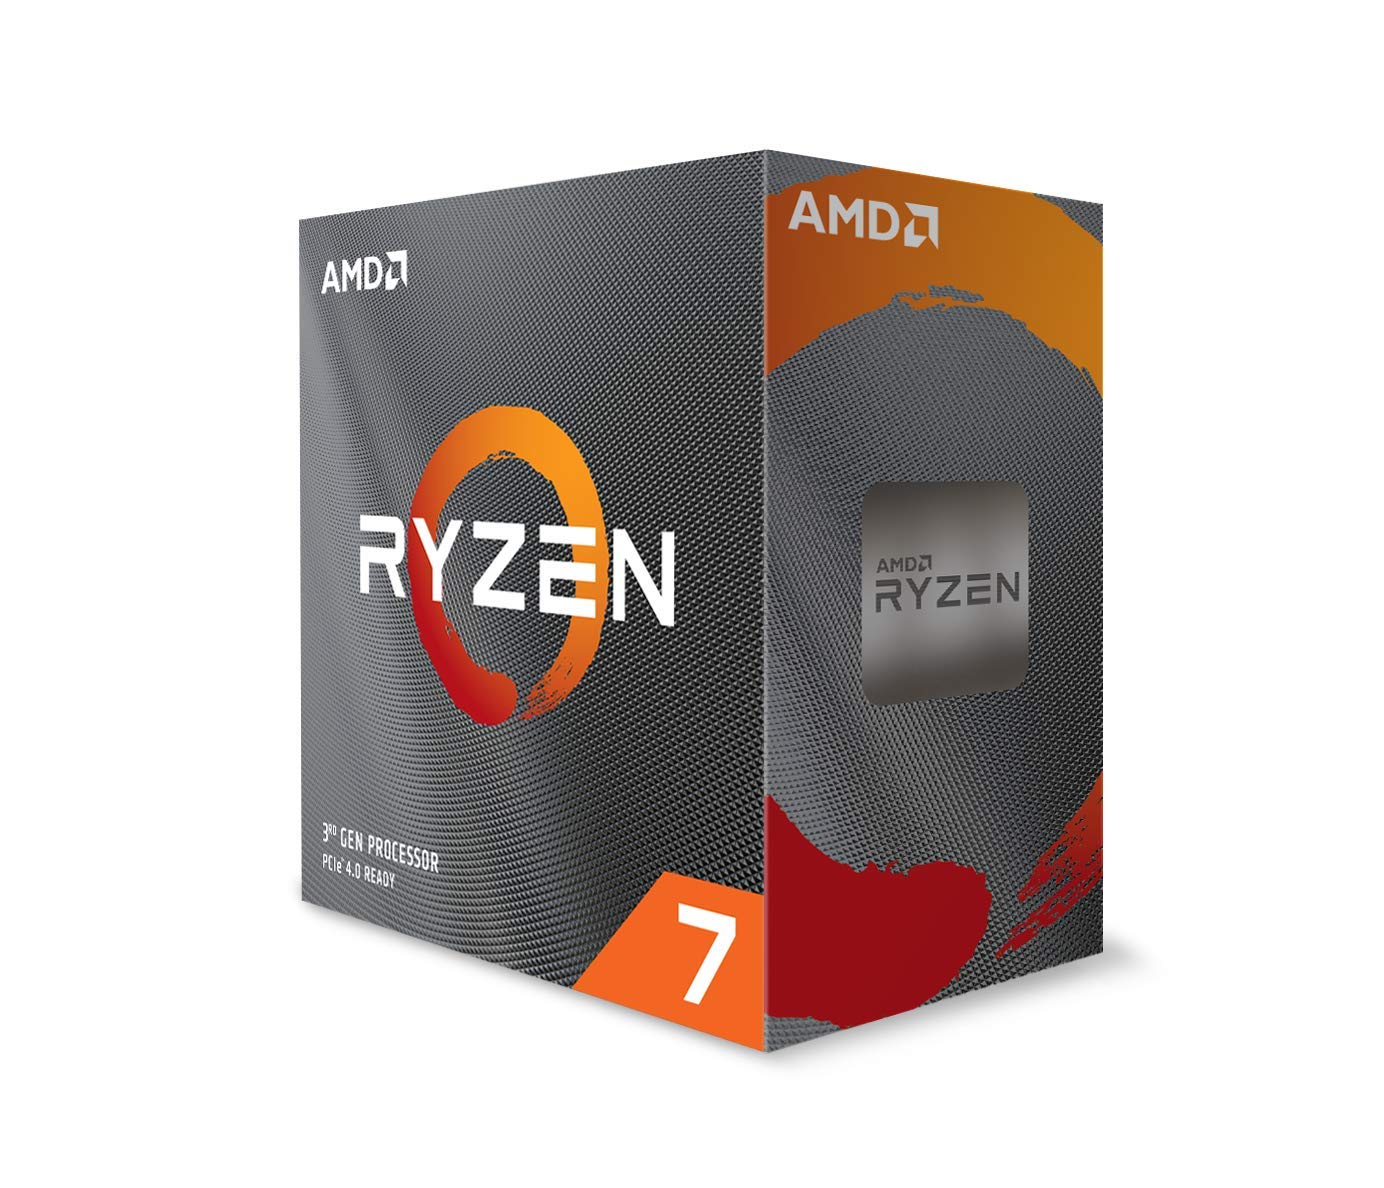 AMD 3000 Series Ryzen 7 3800XT Desktop Processor 8 cores